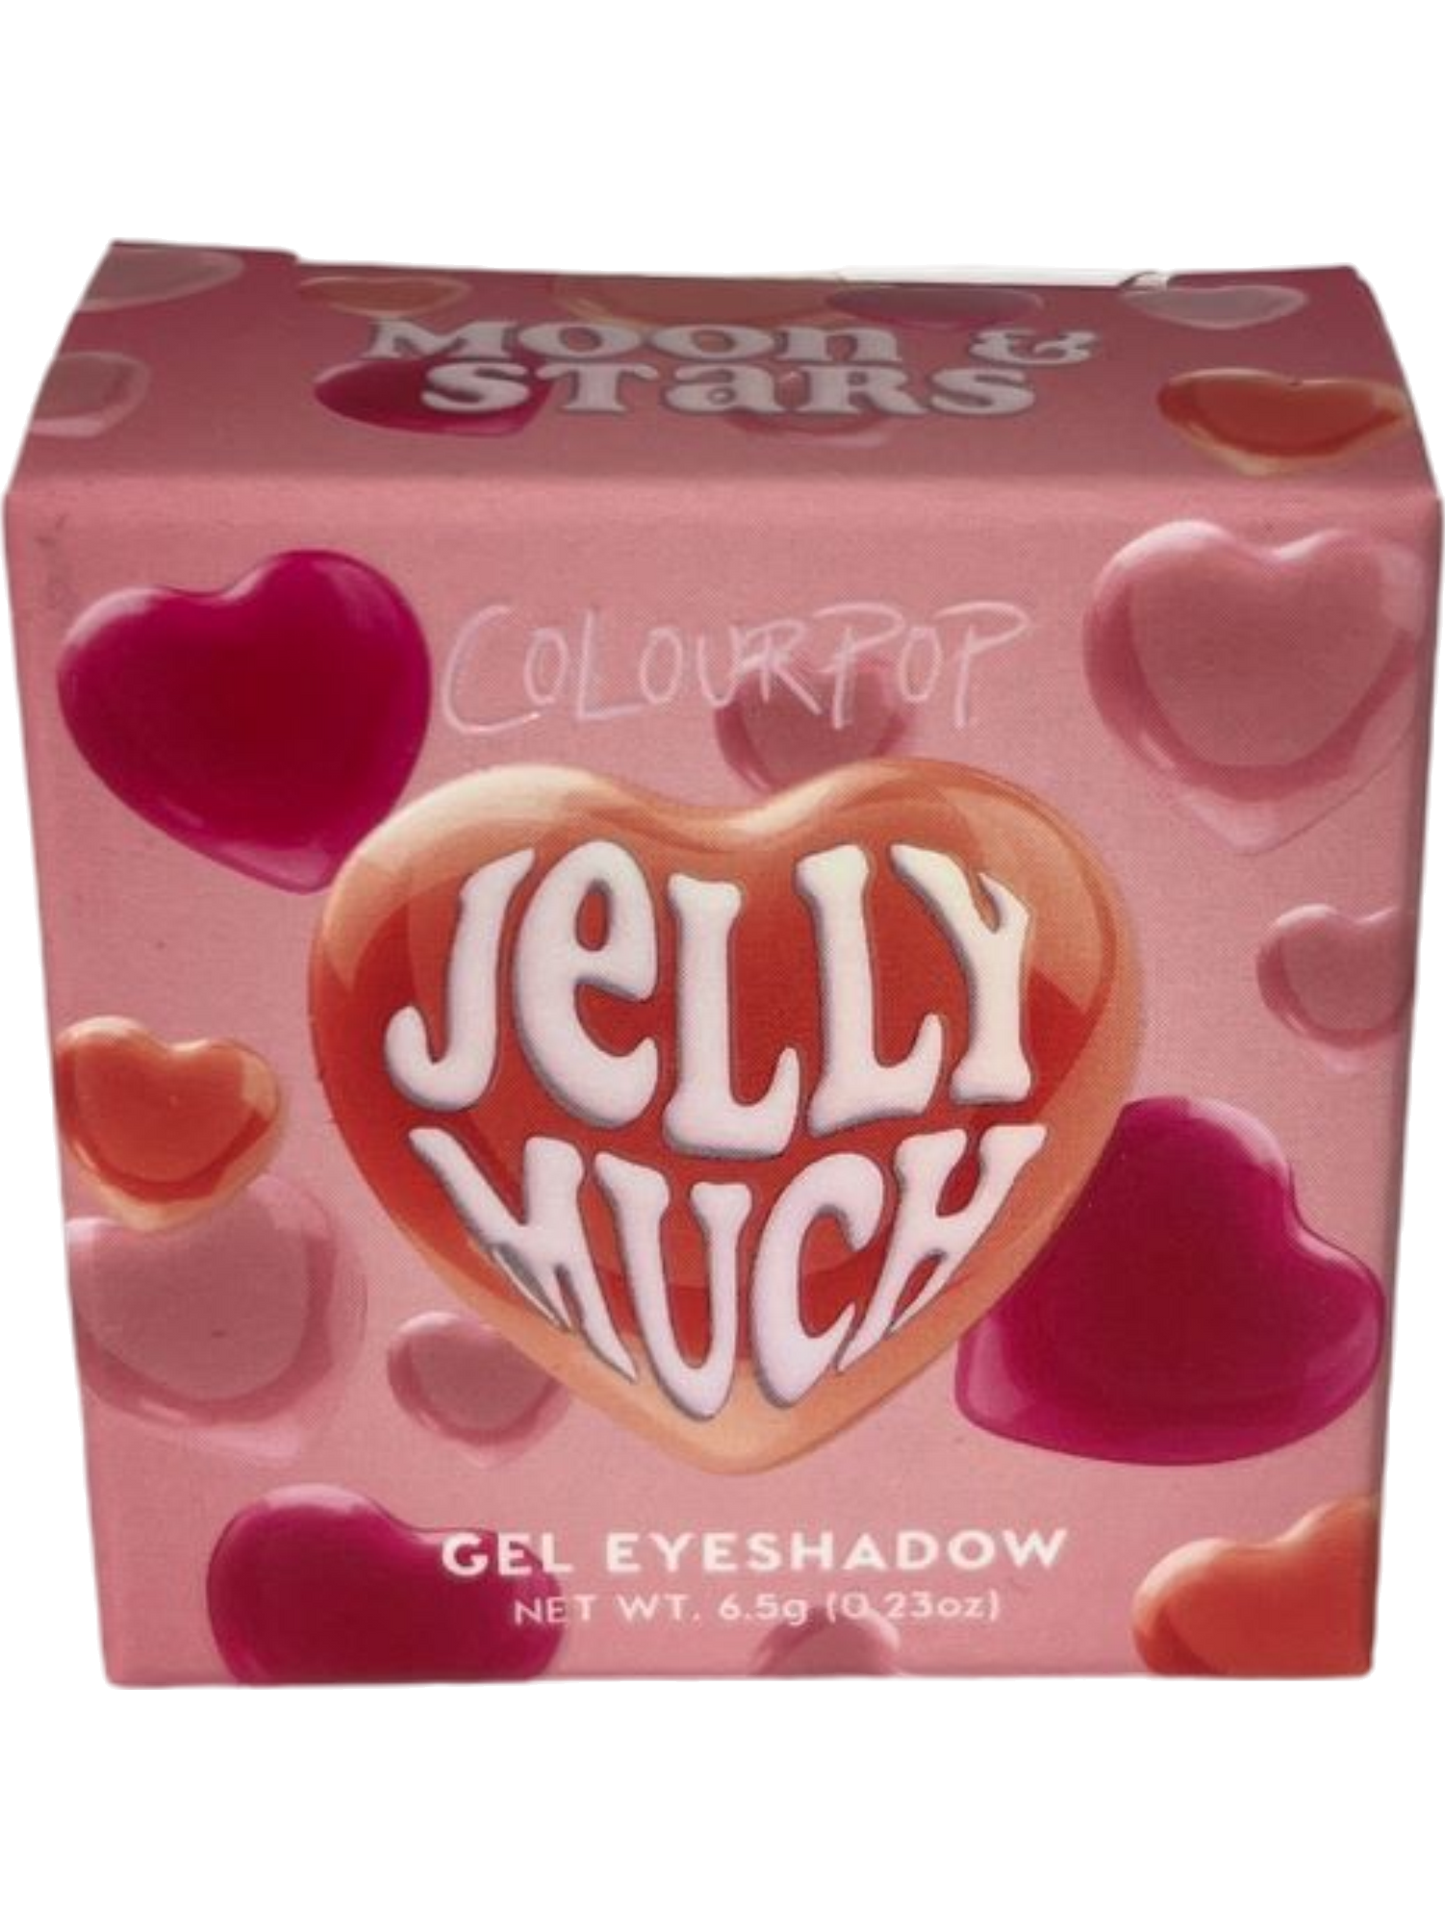 ColourPop Pink Jelly Much Gel Eyeshadow Moon & Stars